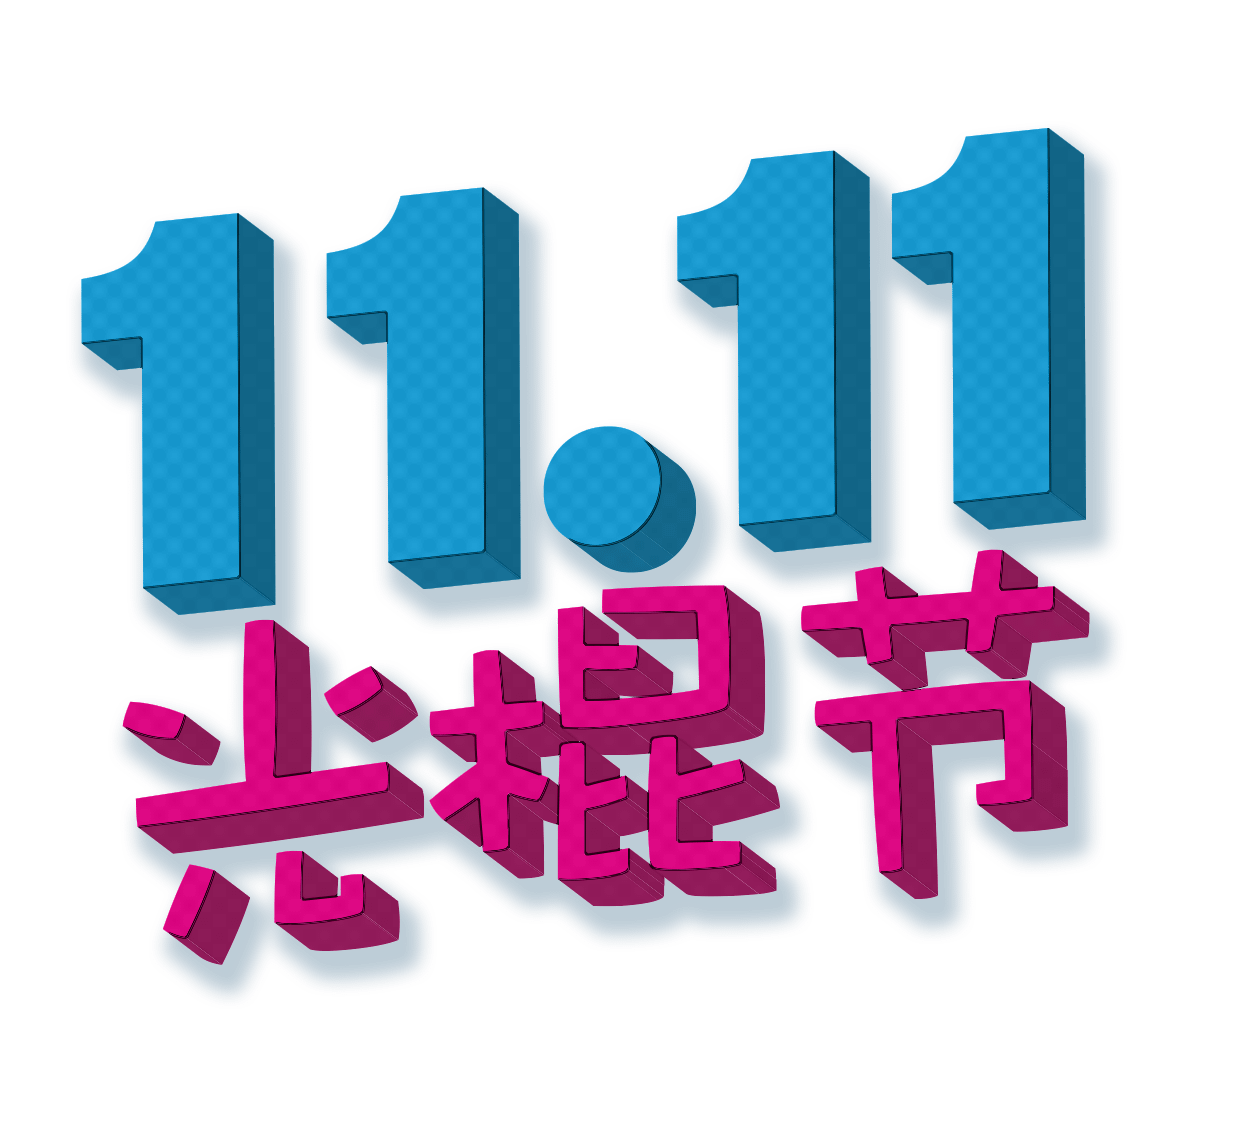 11/11 Chine e-commerce